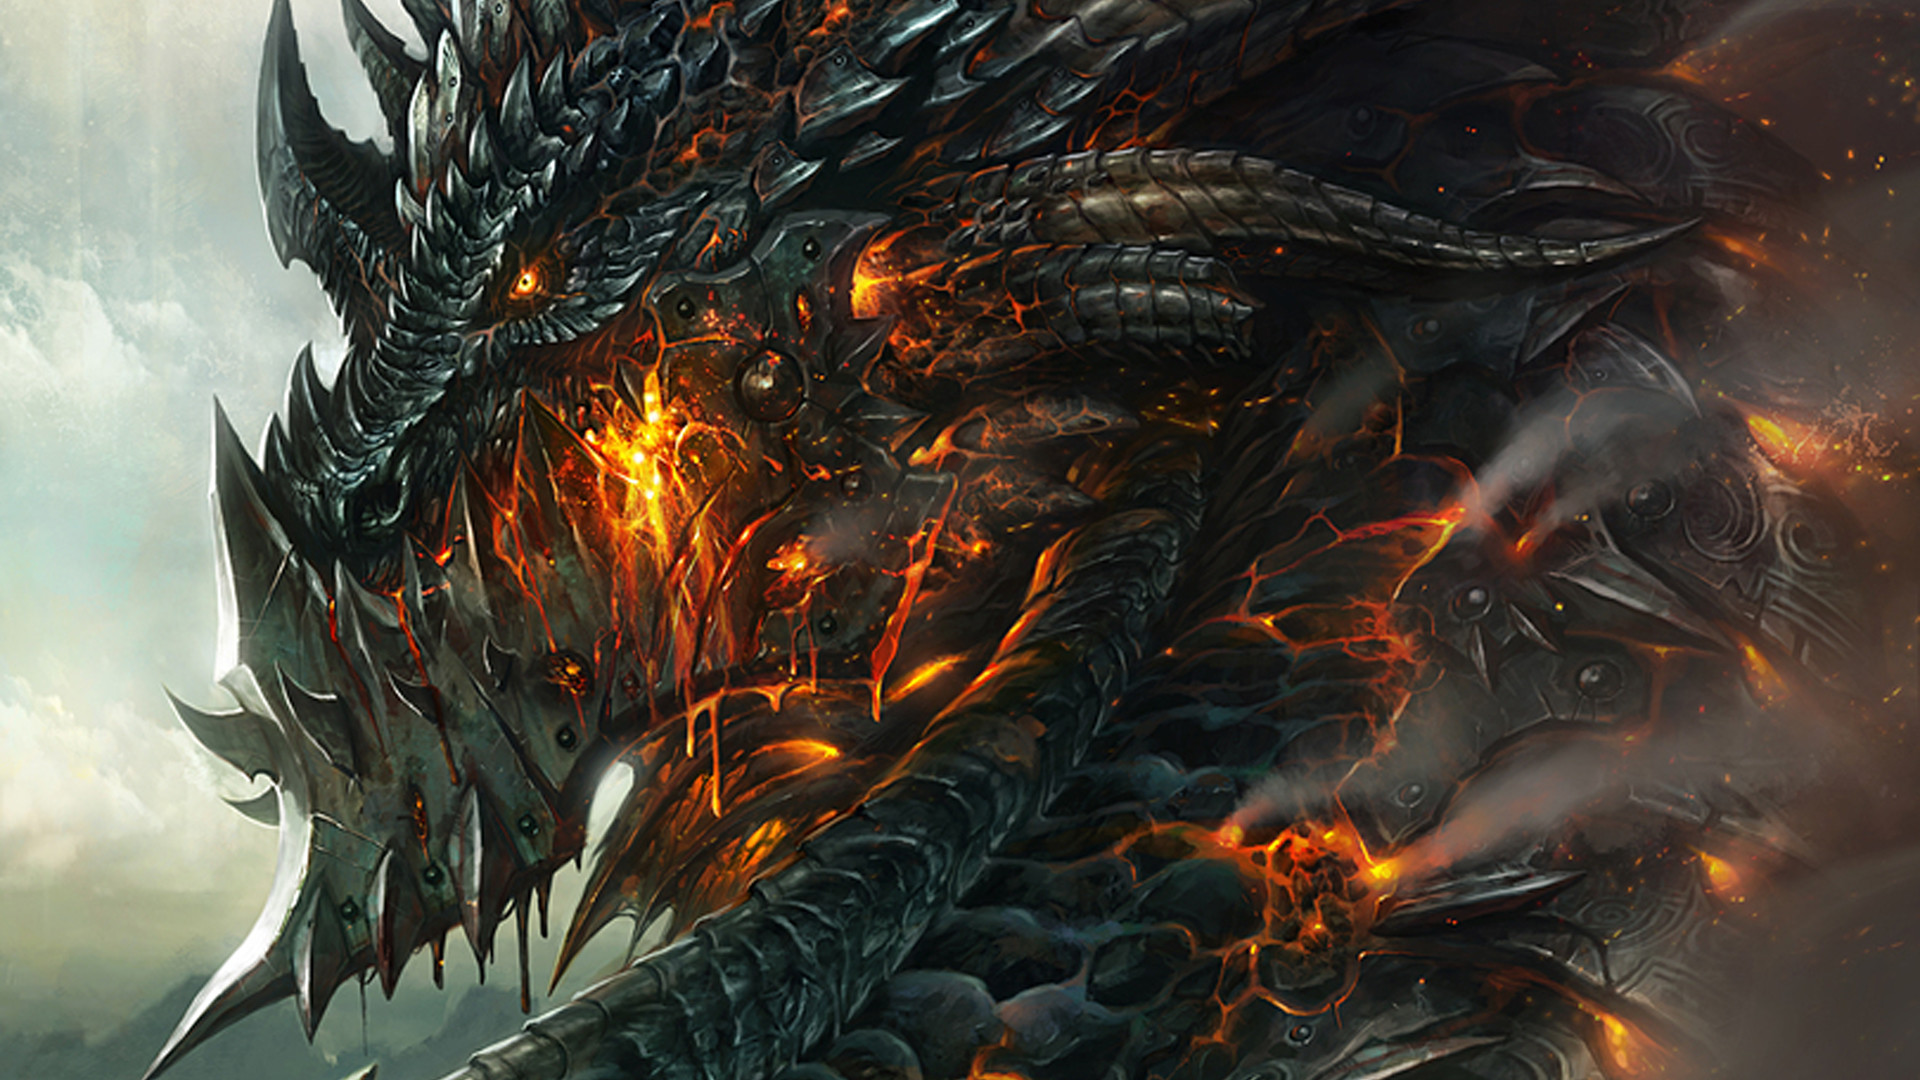 Cool Dragons Wallpaper.